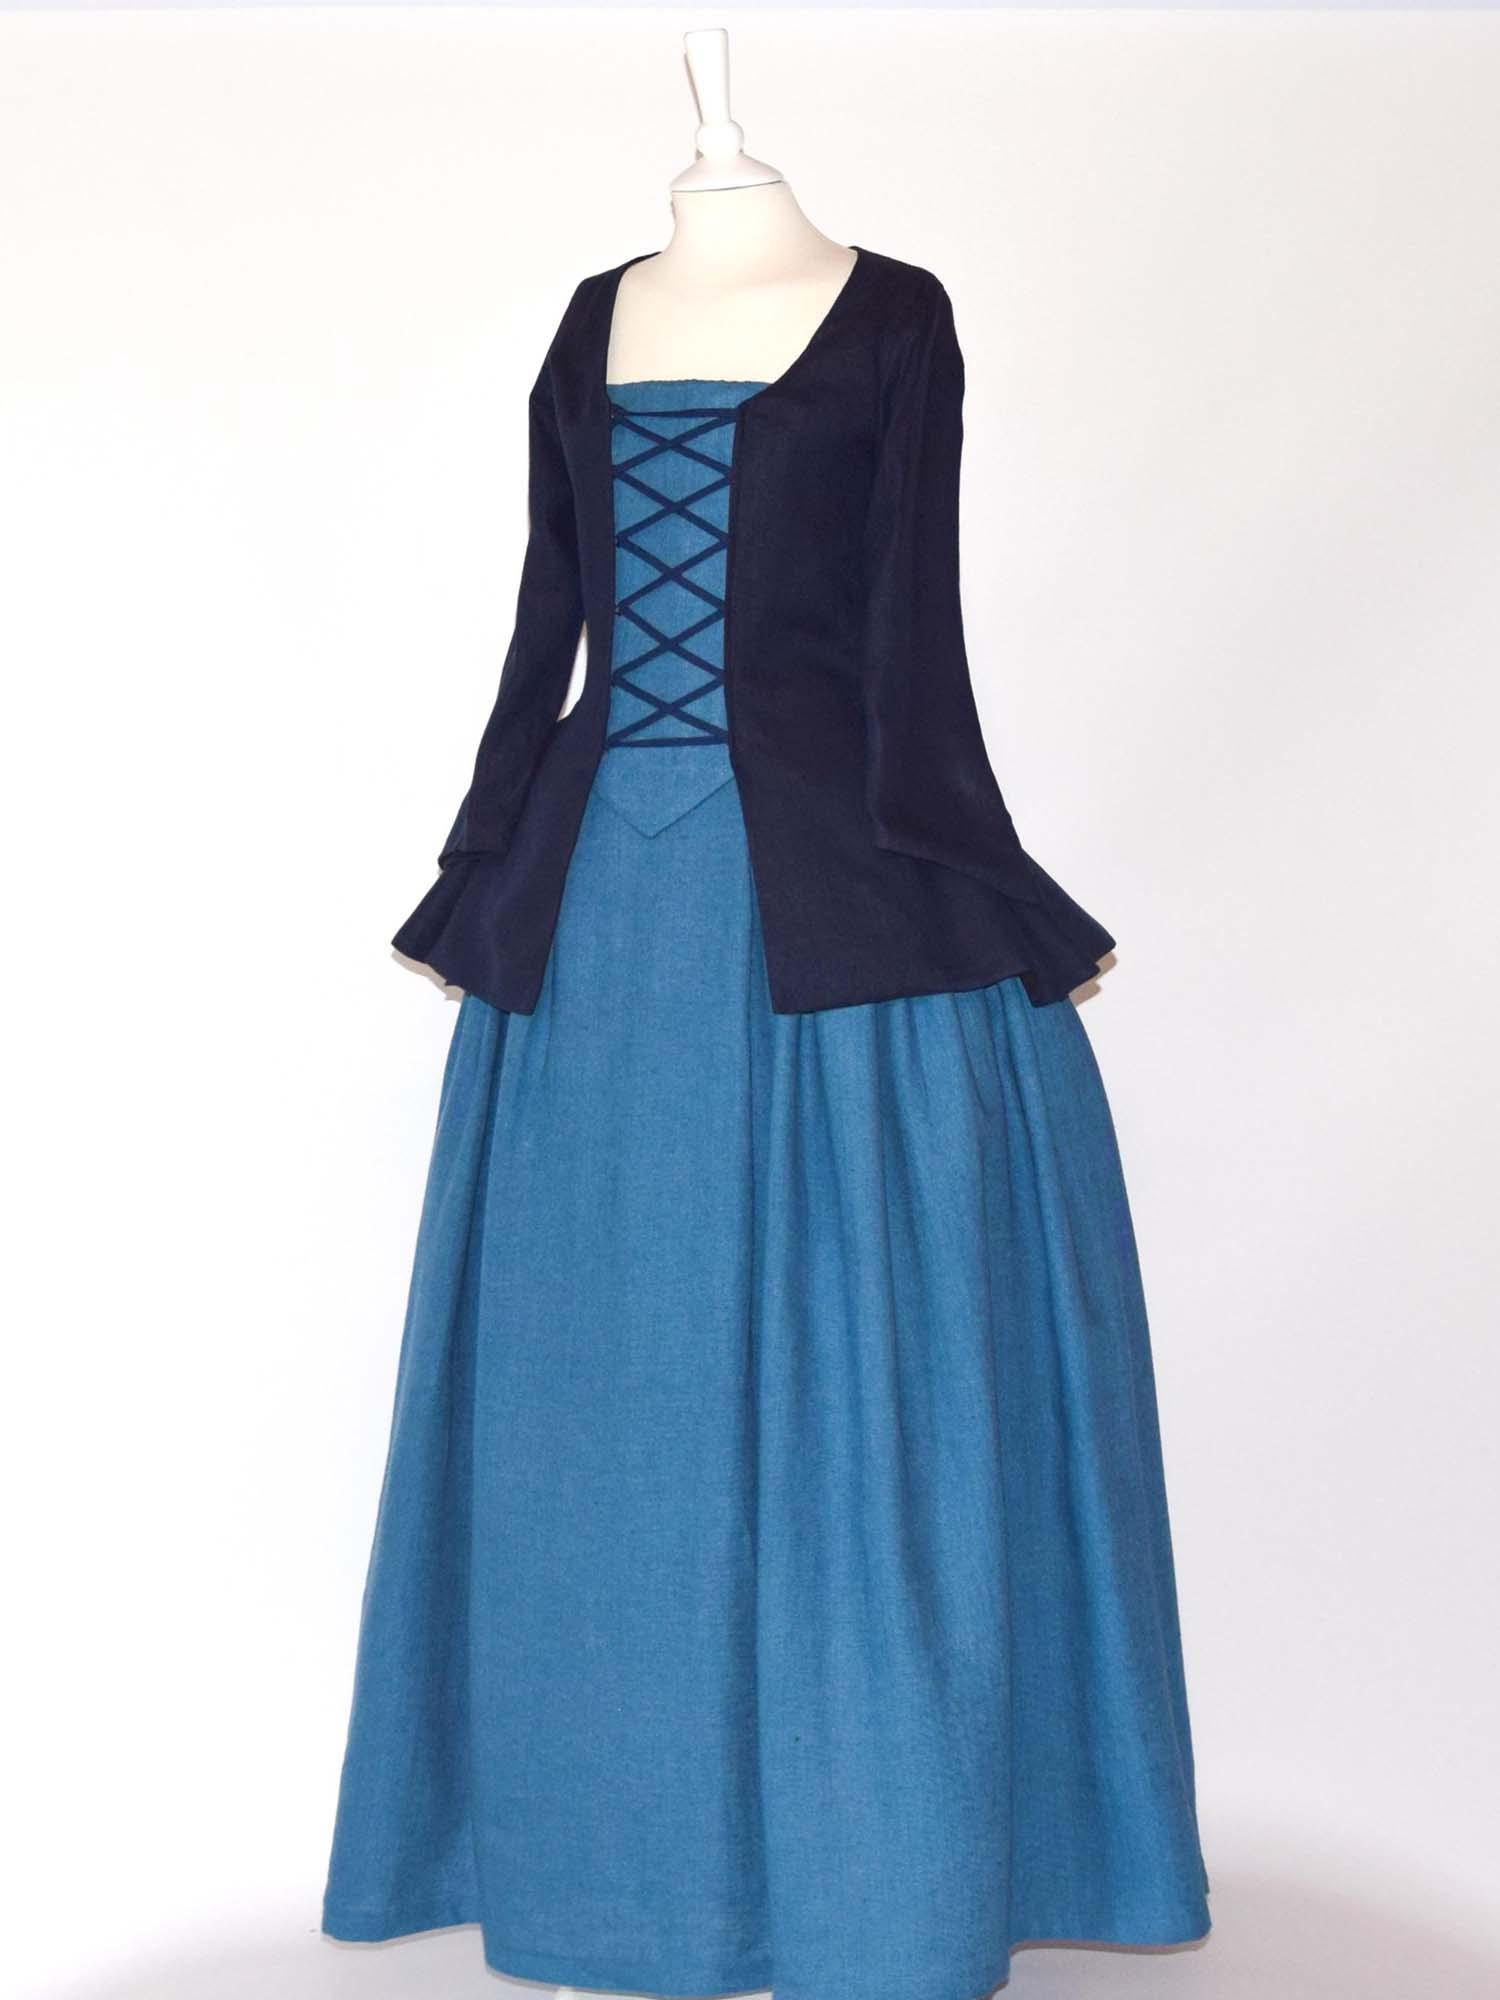 JANET, Colonial Costume in Night & Steel Blue Linen - Atelier Serraspina